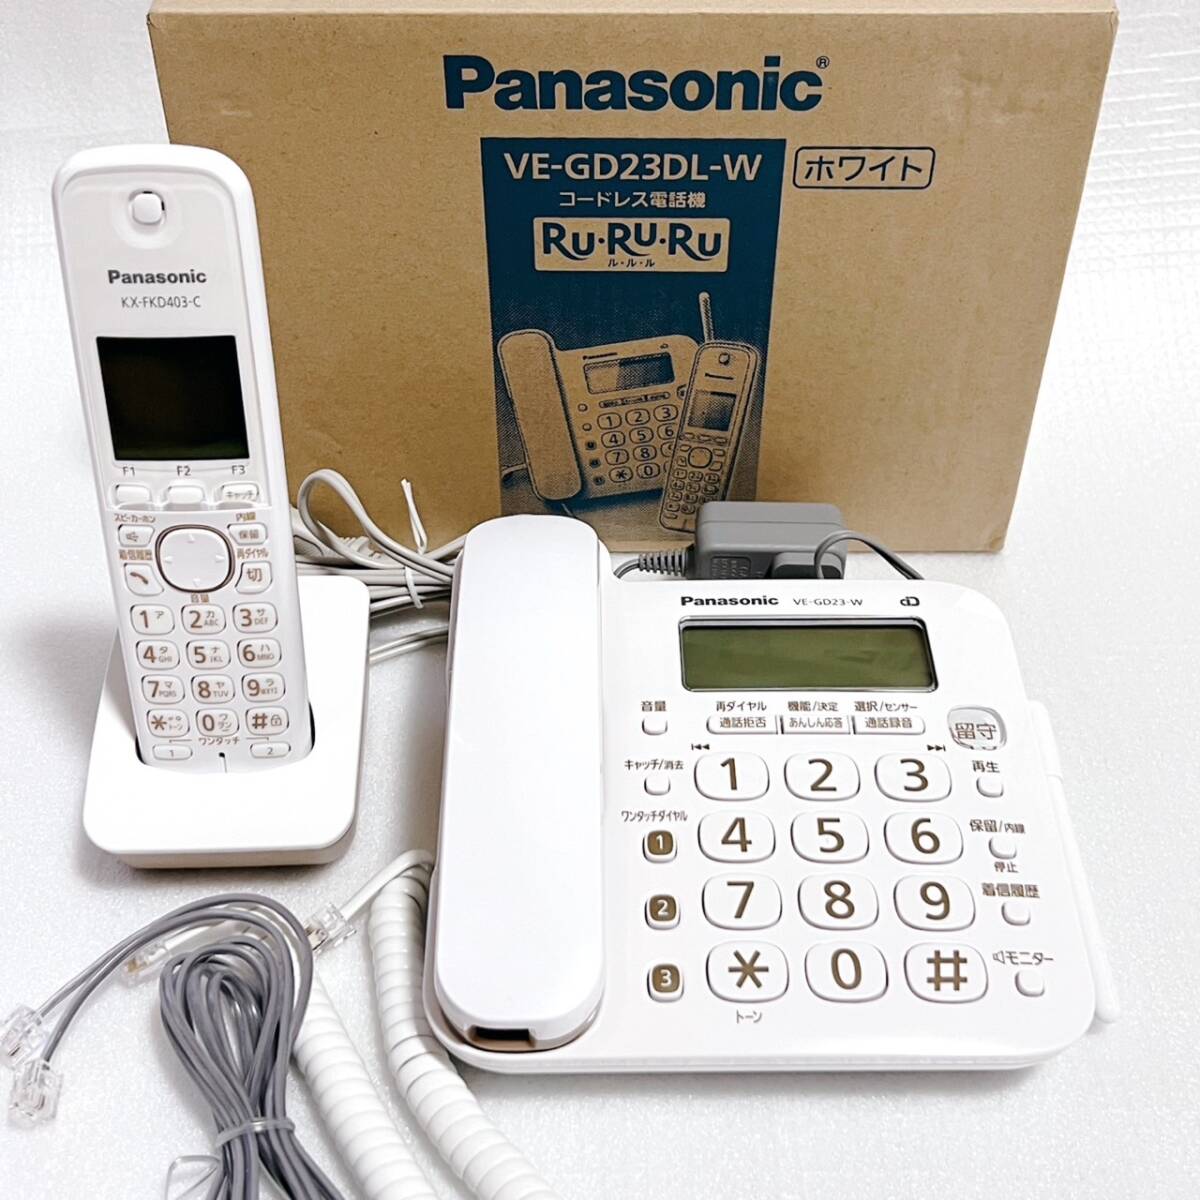 A70 019 【未使用】★Panasonic コードレス電話 VE-GD23DL-W ホワイト★の画像1